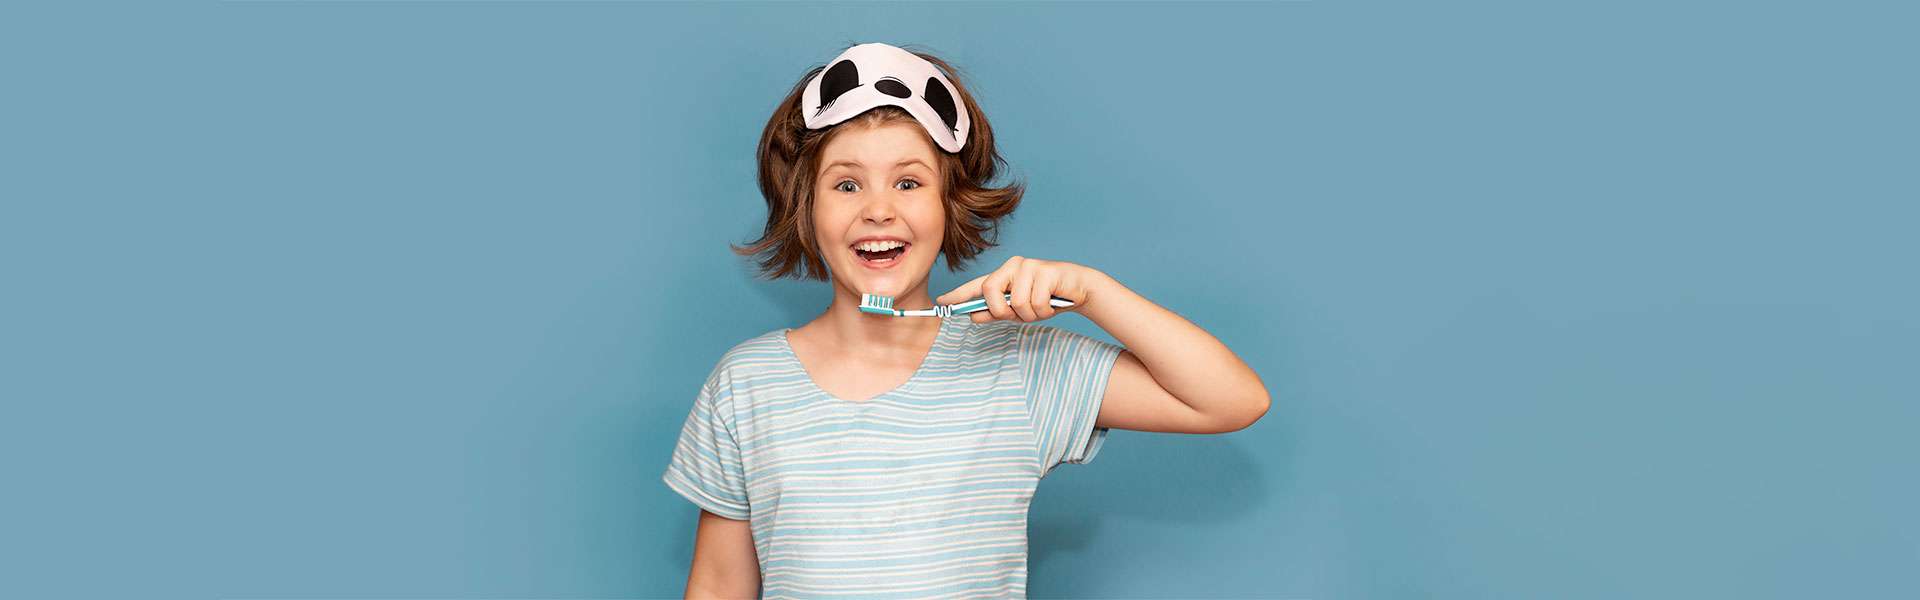 Can Fluoride Treatment Make Teeth Sensitive?